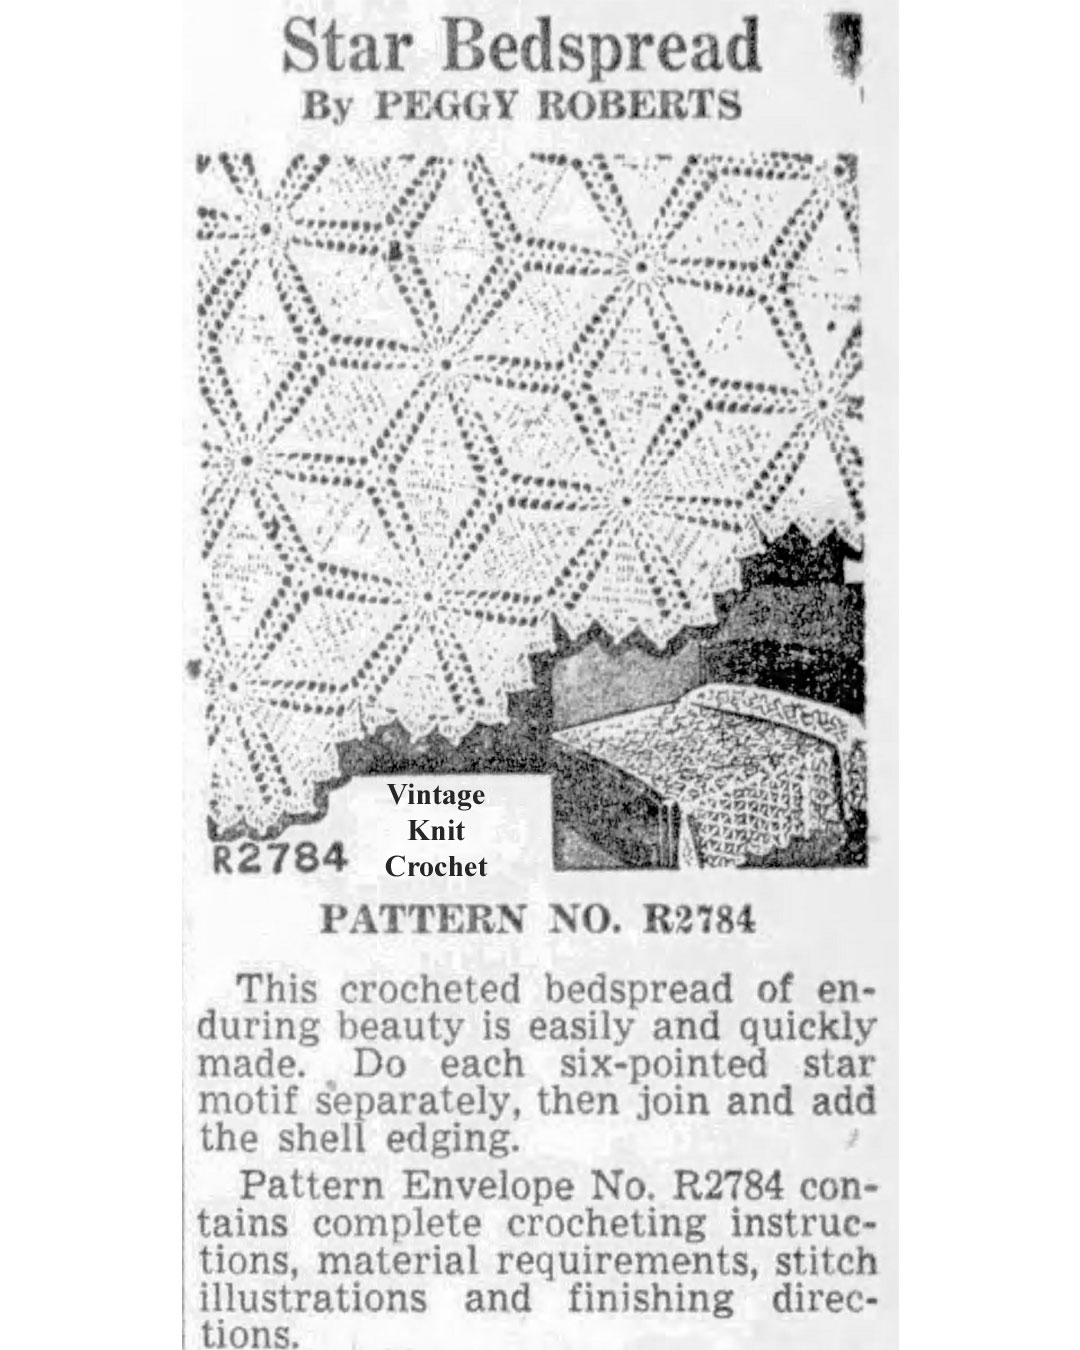 Crochet Star Motif For Bedspread Pattern No R2784 Newspaper Advertisement 